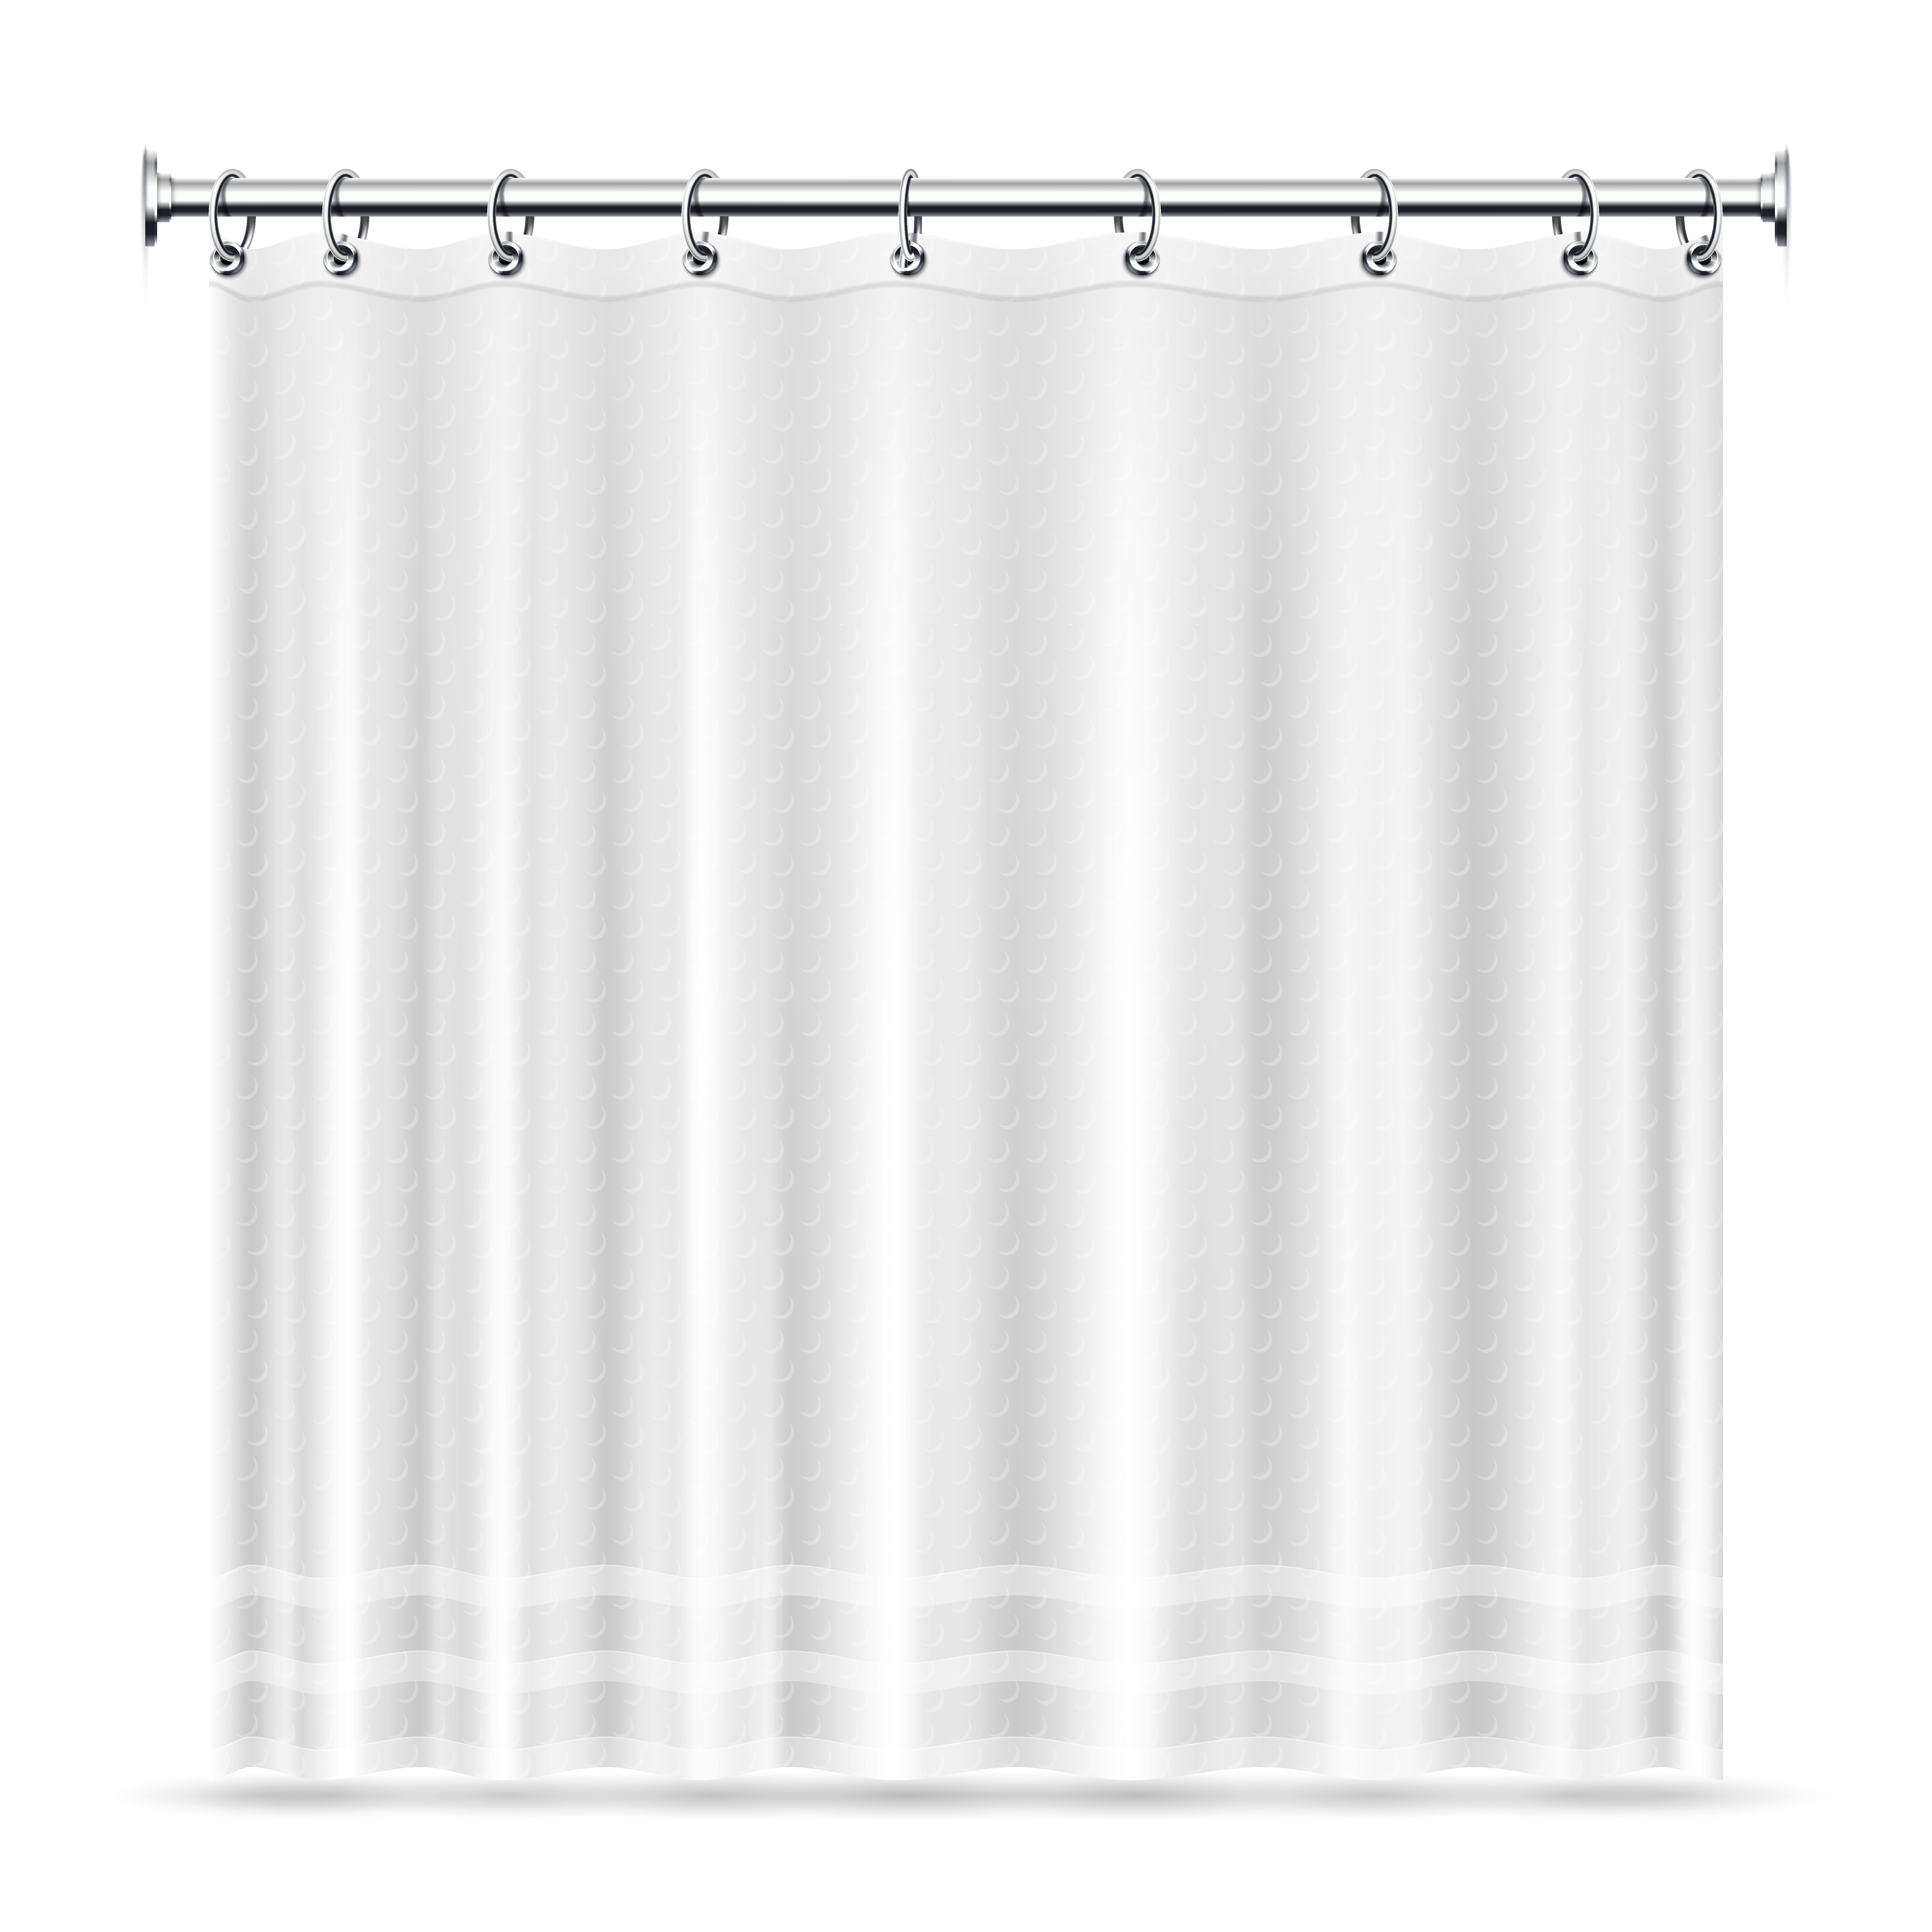 Install curtain pole or bath screen